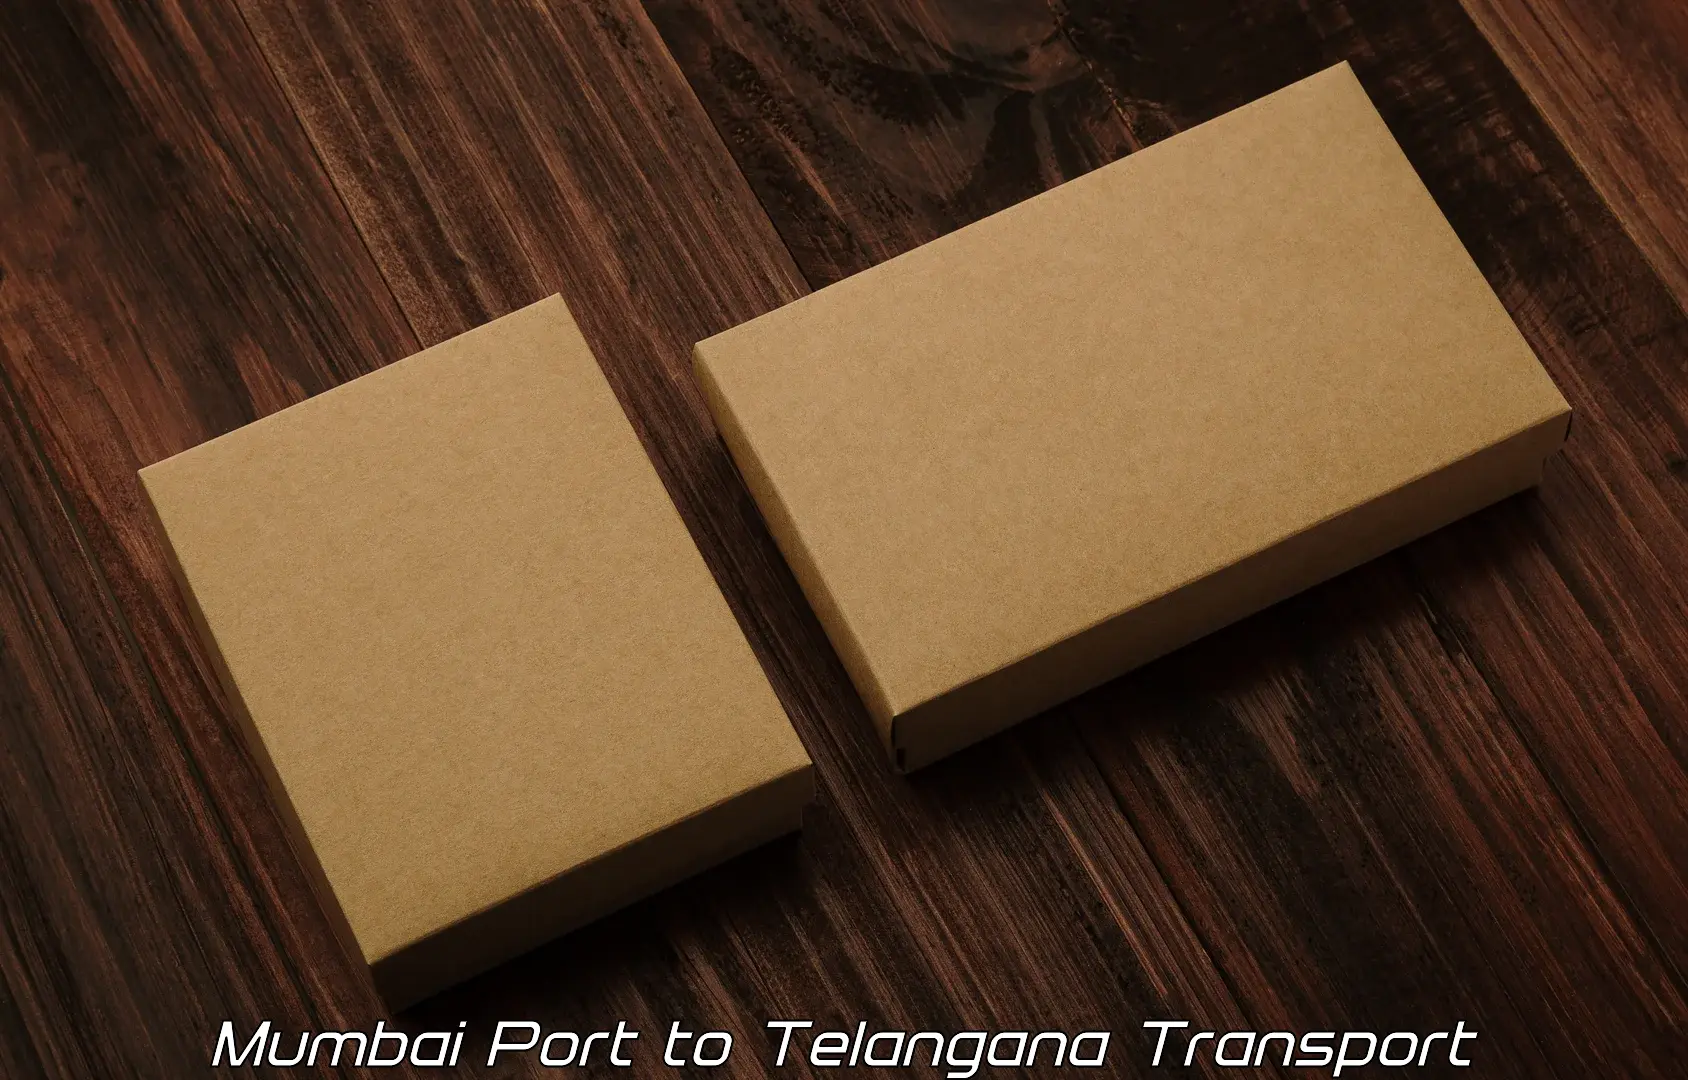 Package delivery services Mumbai Port to Mudigonda